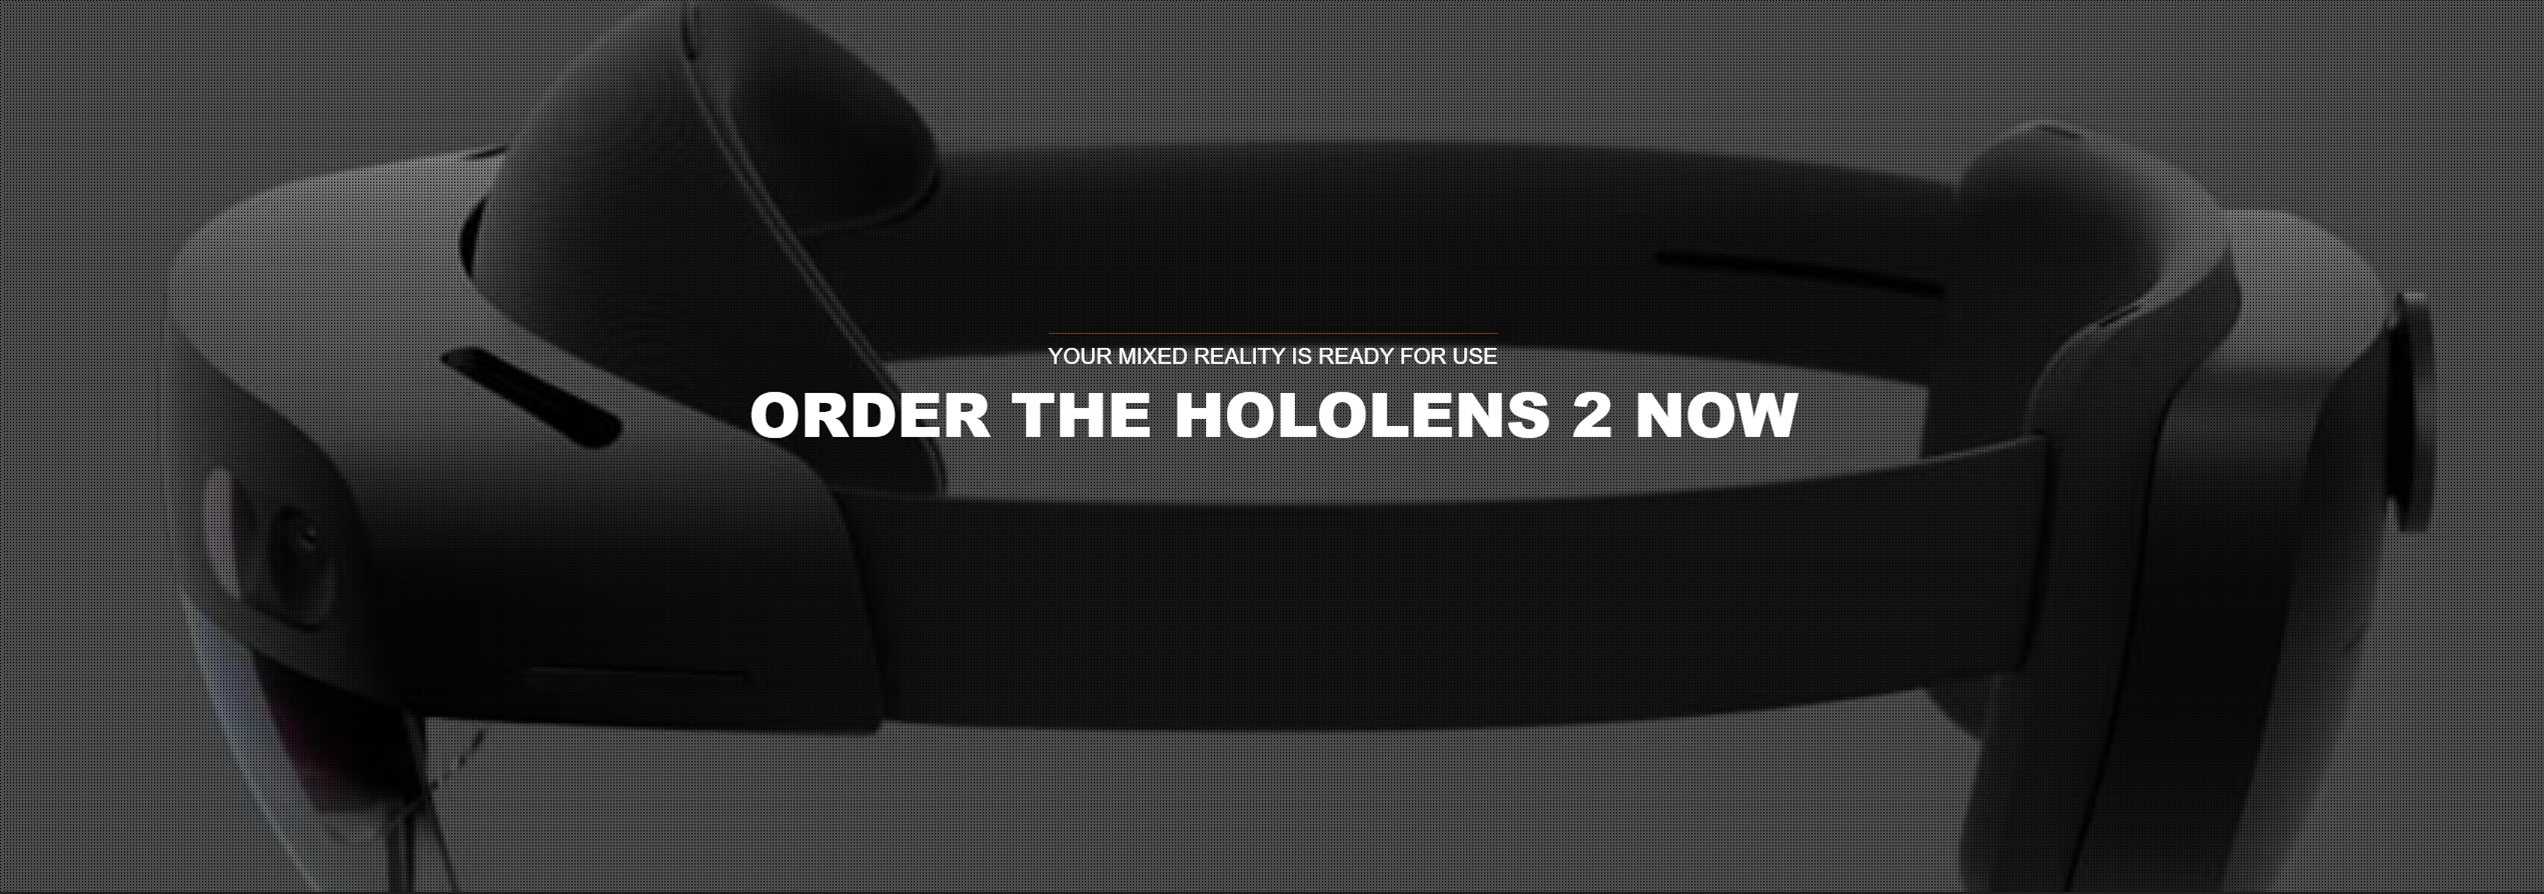 HoloLens-Partner-en